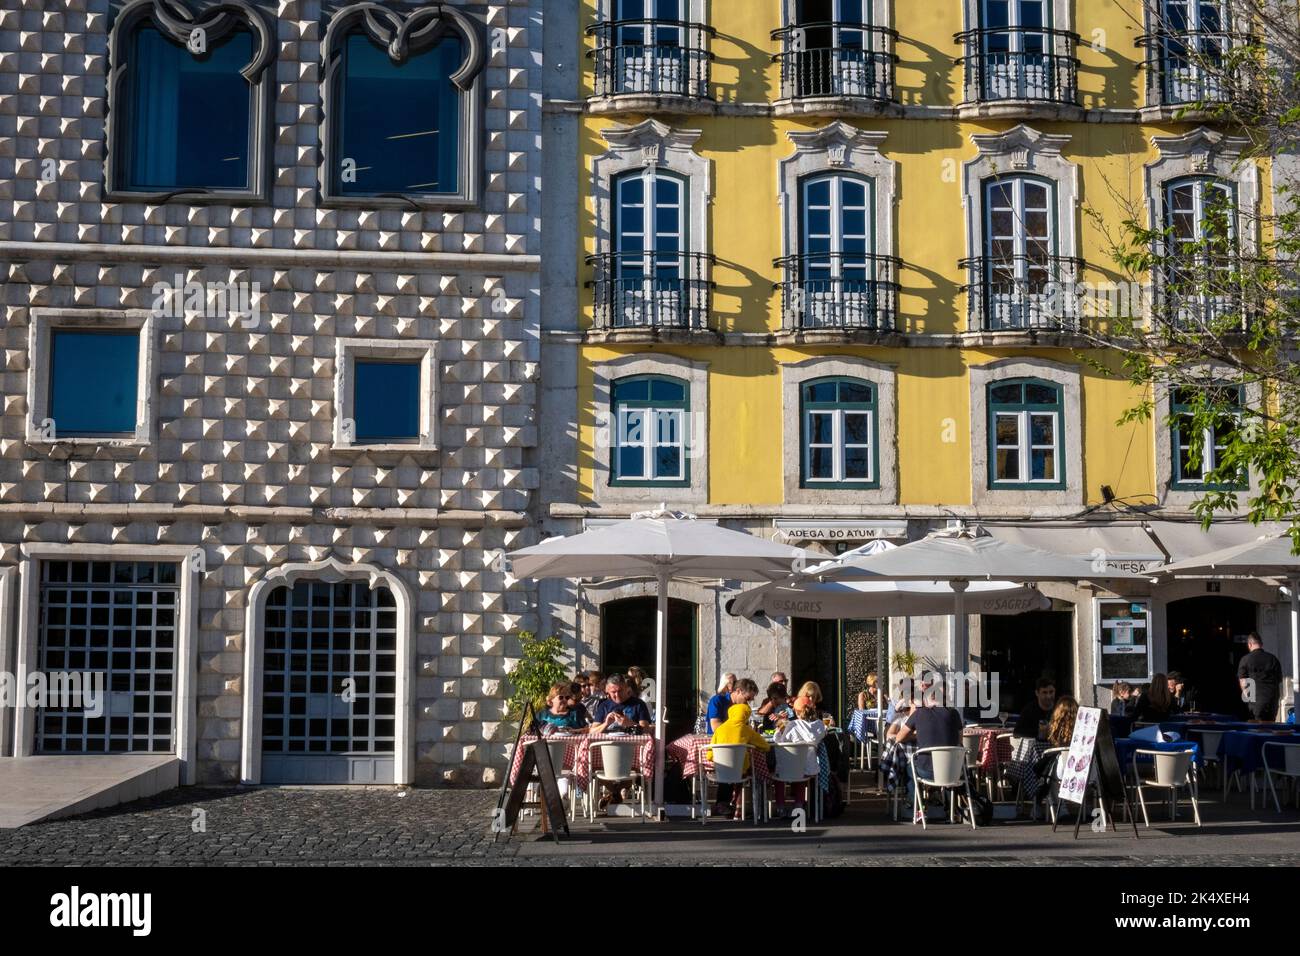 Outdoor café and colorful, ornate building facades, Lisbon, Portugal Stock Photo